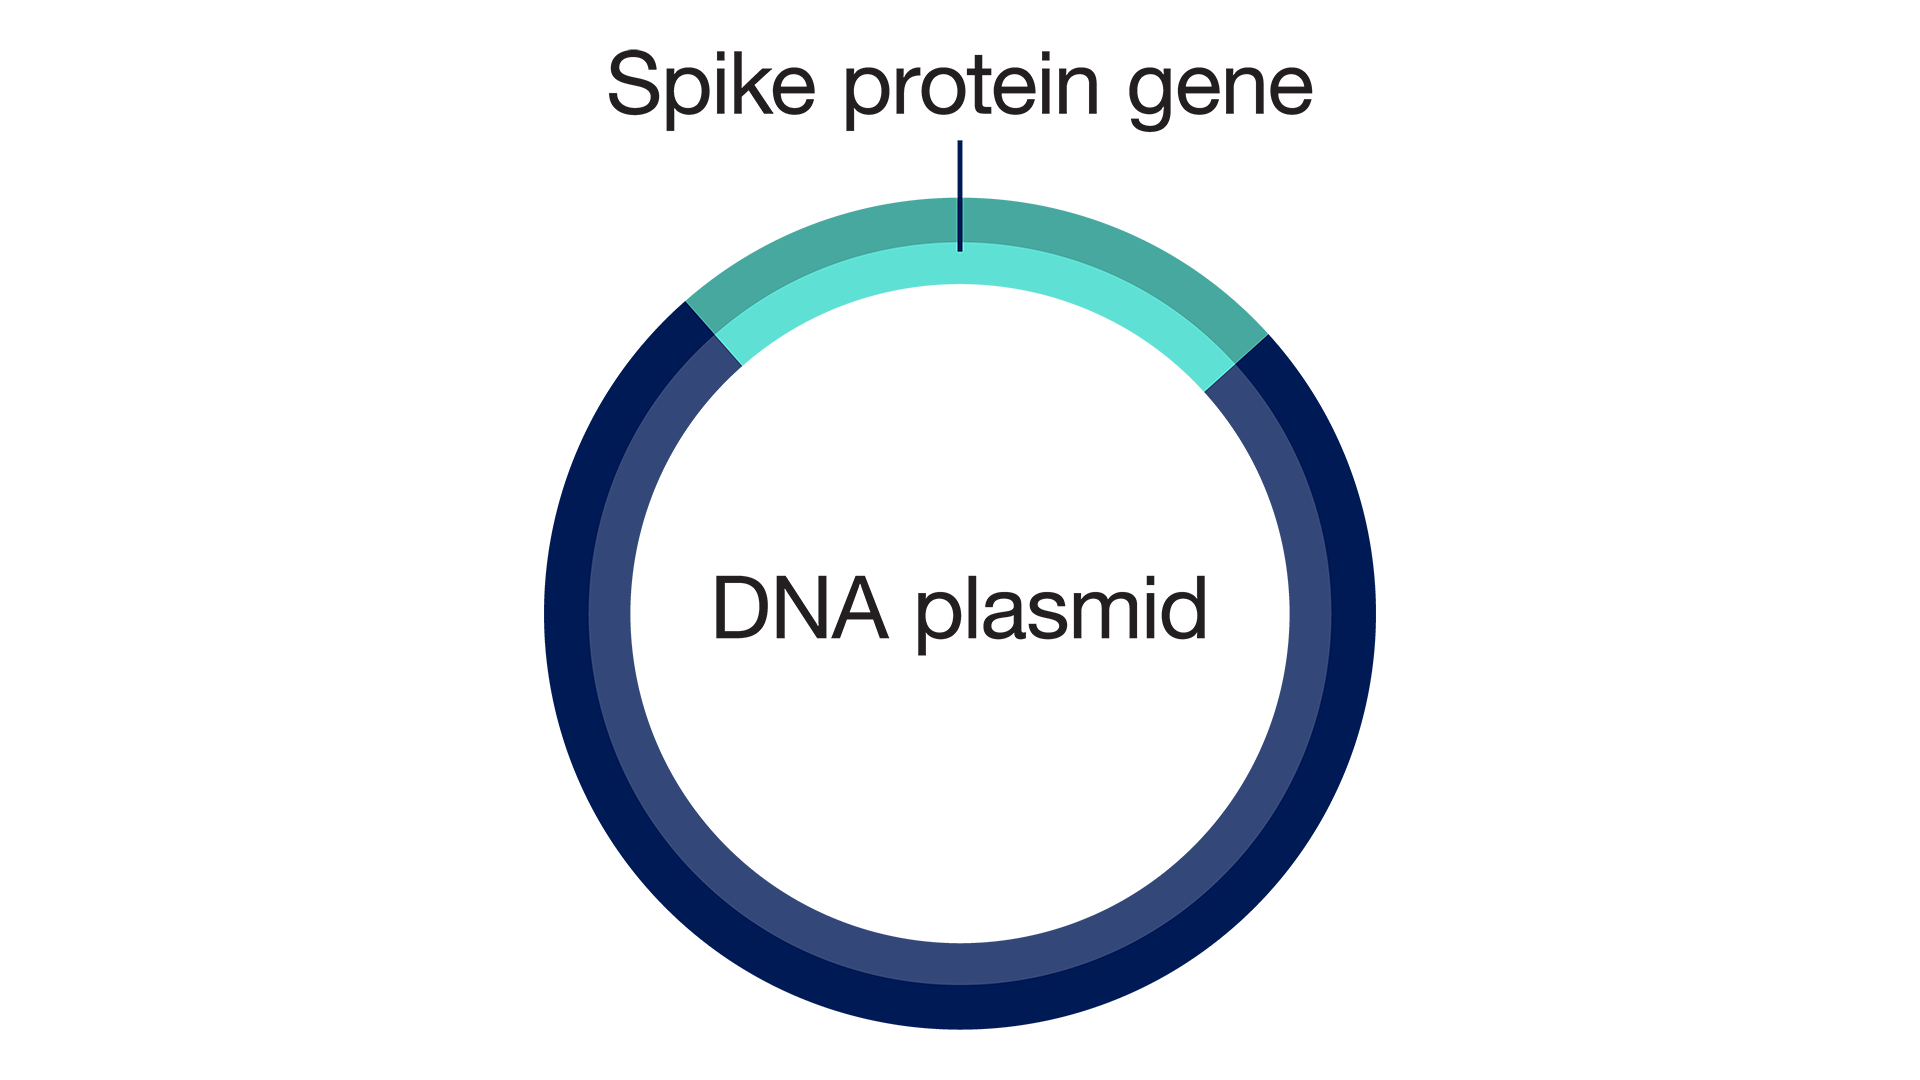 Spike protein gene in a DNA plasmid